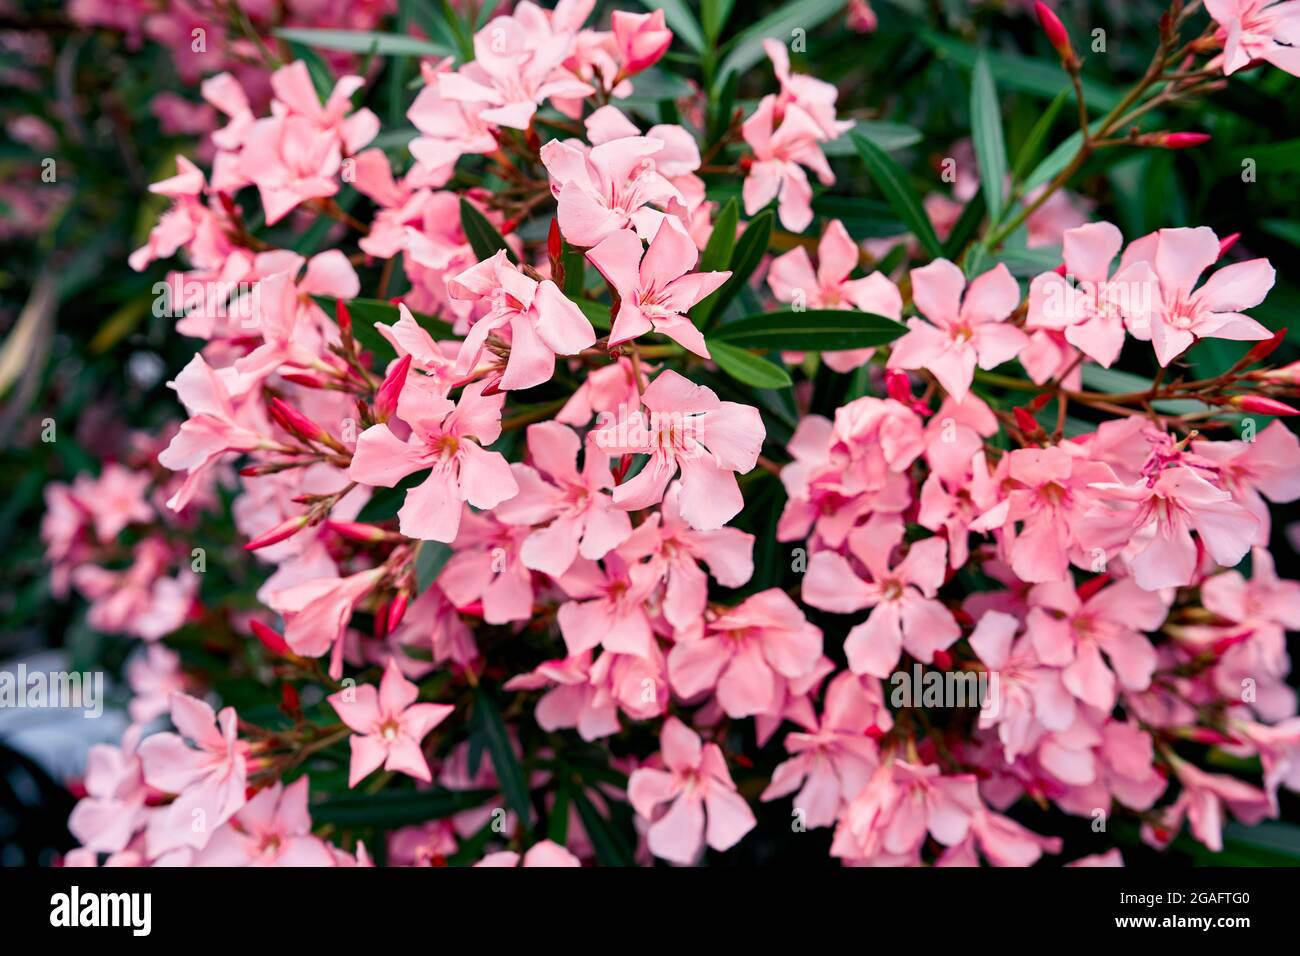 Pink flowering phlox bush. Close-up Stock Photo